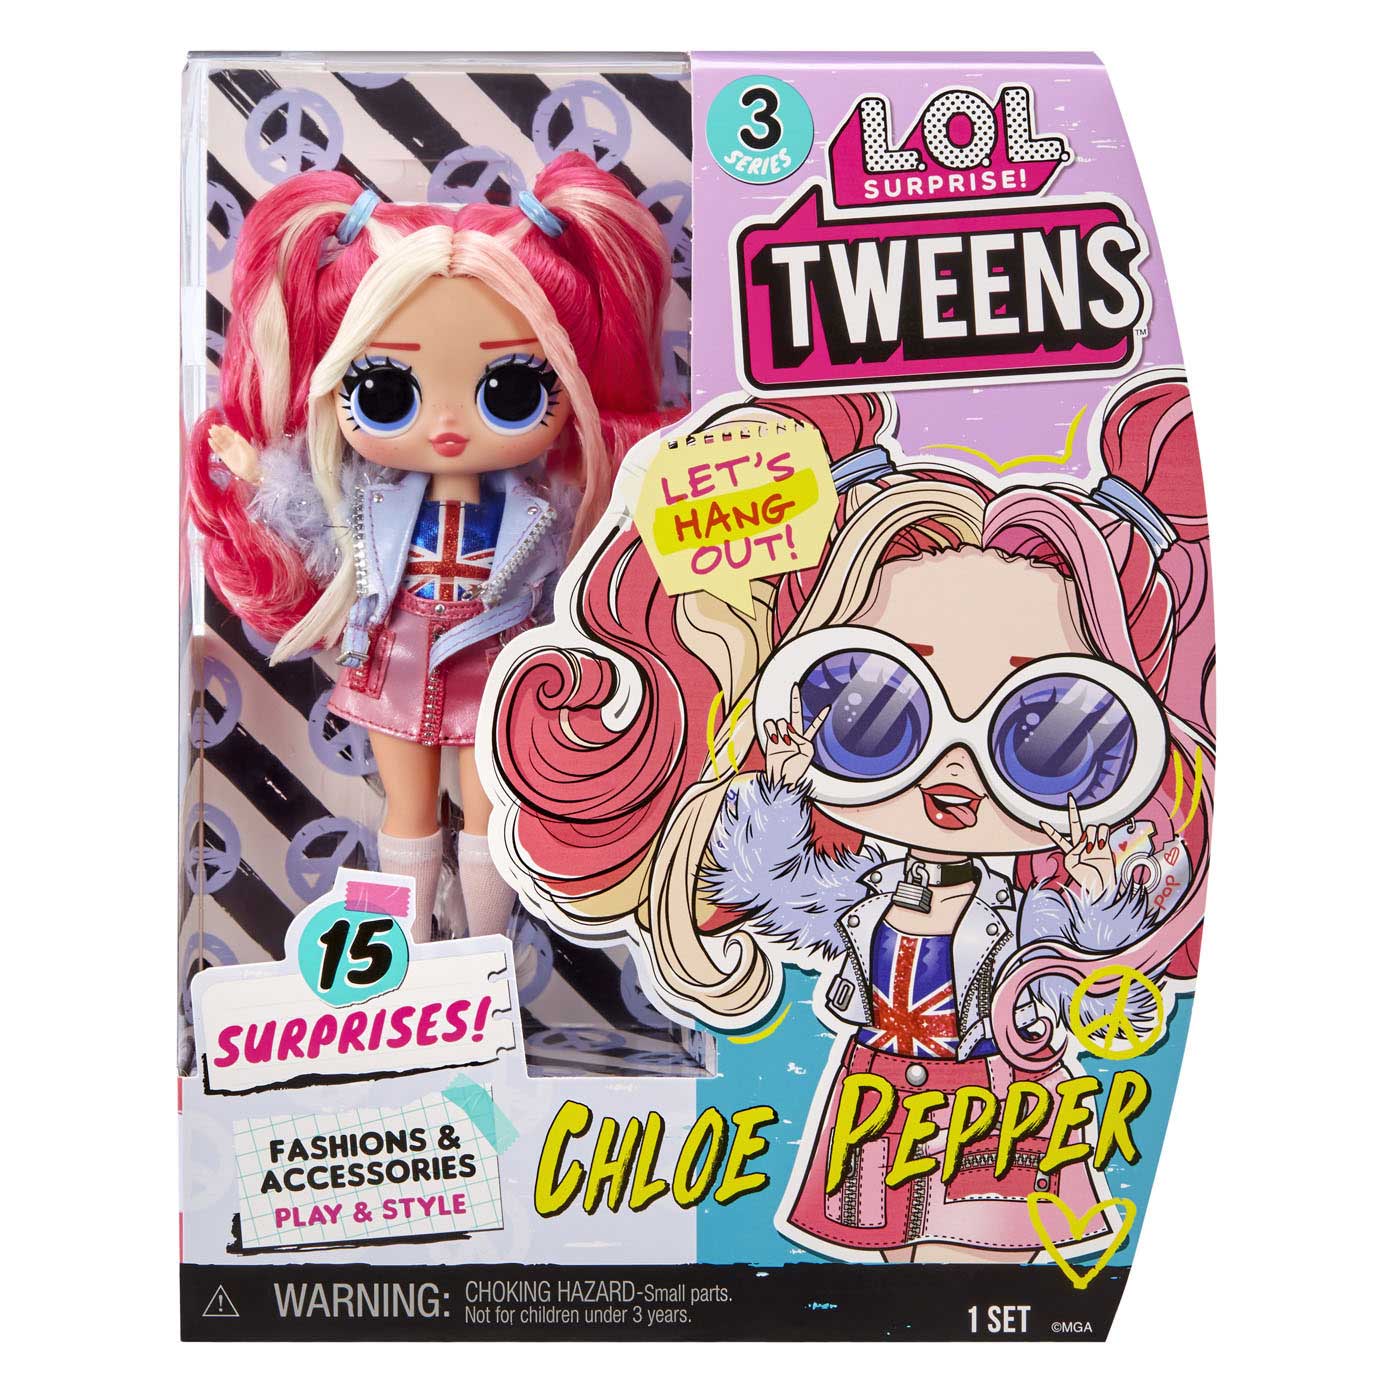 L.O.L. Surprise Tweens S3 Pop - Chloe Pepper